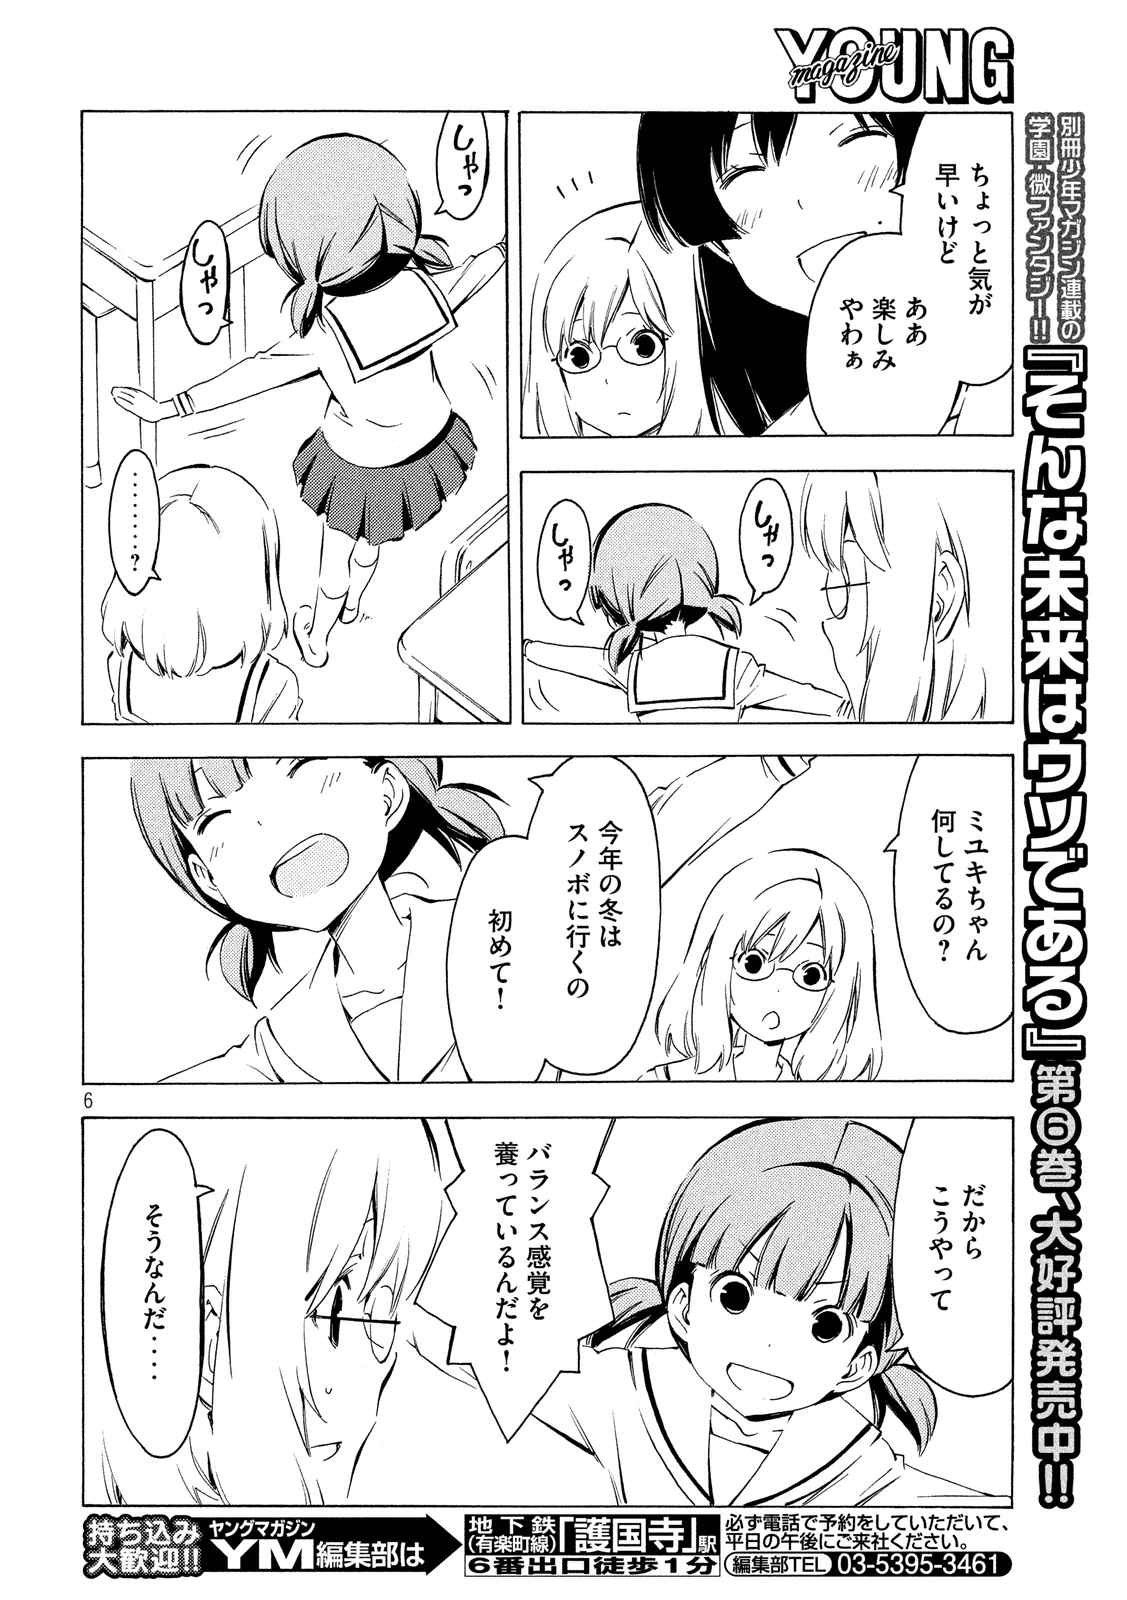 Minami-ke - Chapter 306 - Page 6